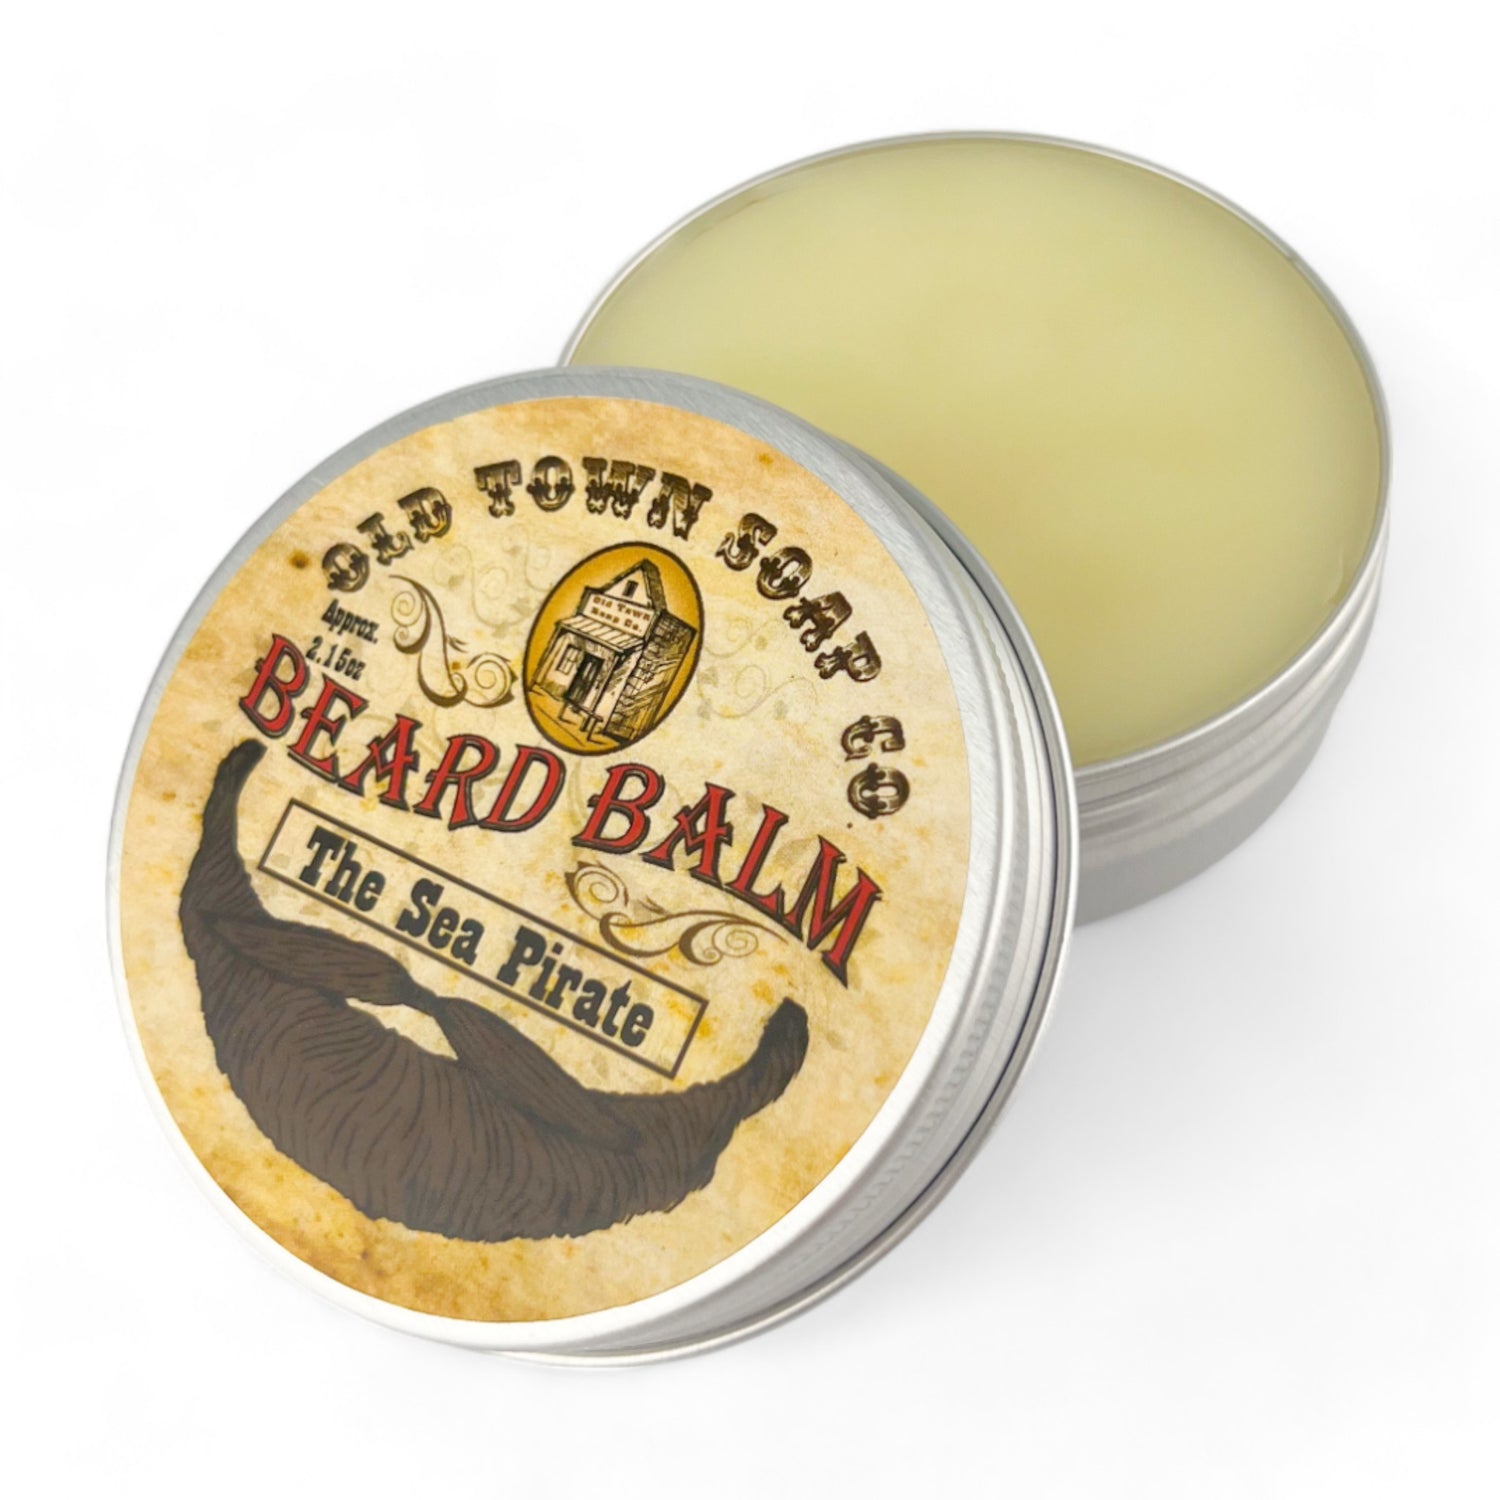 The Sea Pirate Beard Balm - Old Town Soap Co.